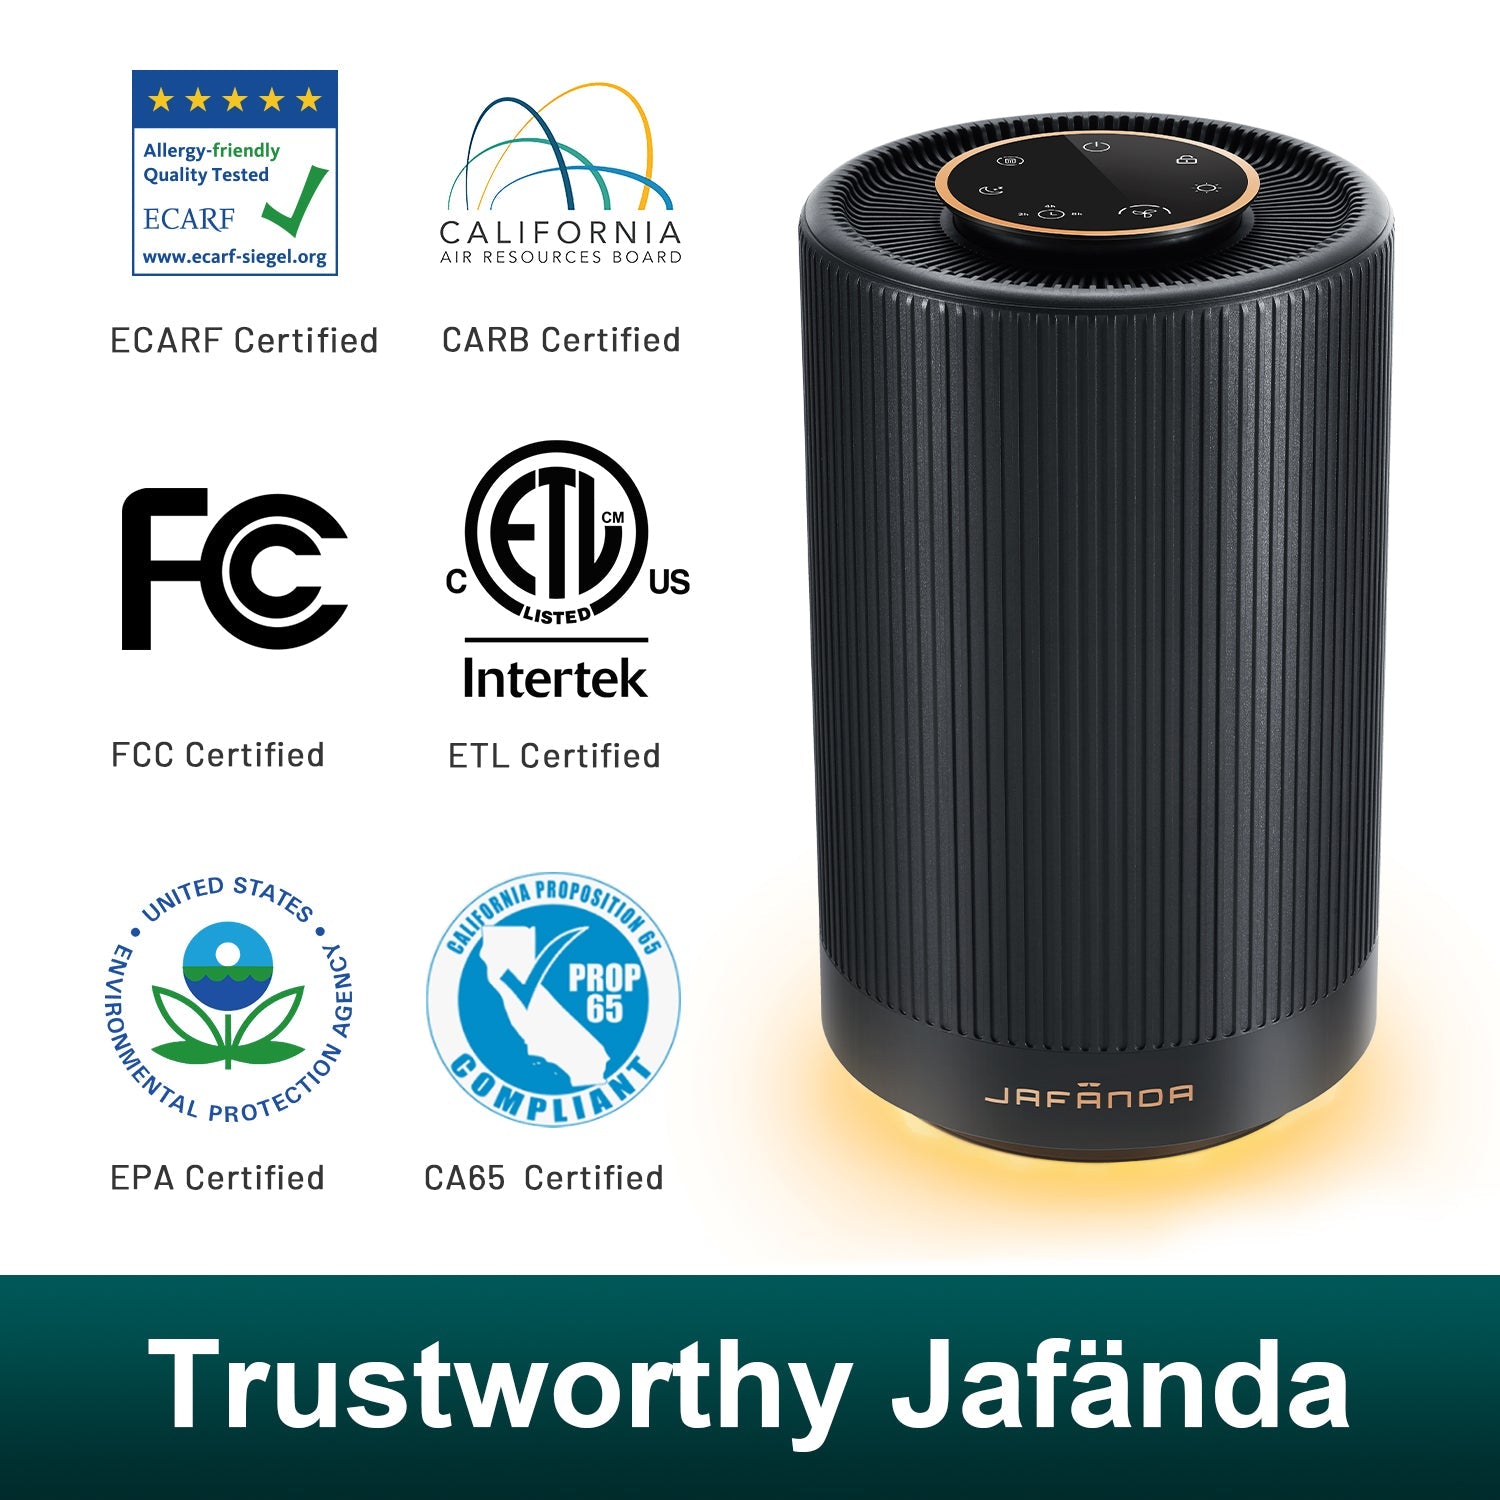 Jafanda Air Purifier for Home Bedroom Up to 450 sq ft, with H13 HEPA Air Filter, 22dB Quiet Sleep Mode, Air Cleaner Eliminates Allergens, Smoke, Dust, Mold, Pet Dander, Pollen - Night Light Black - Jafanda